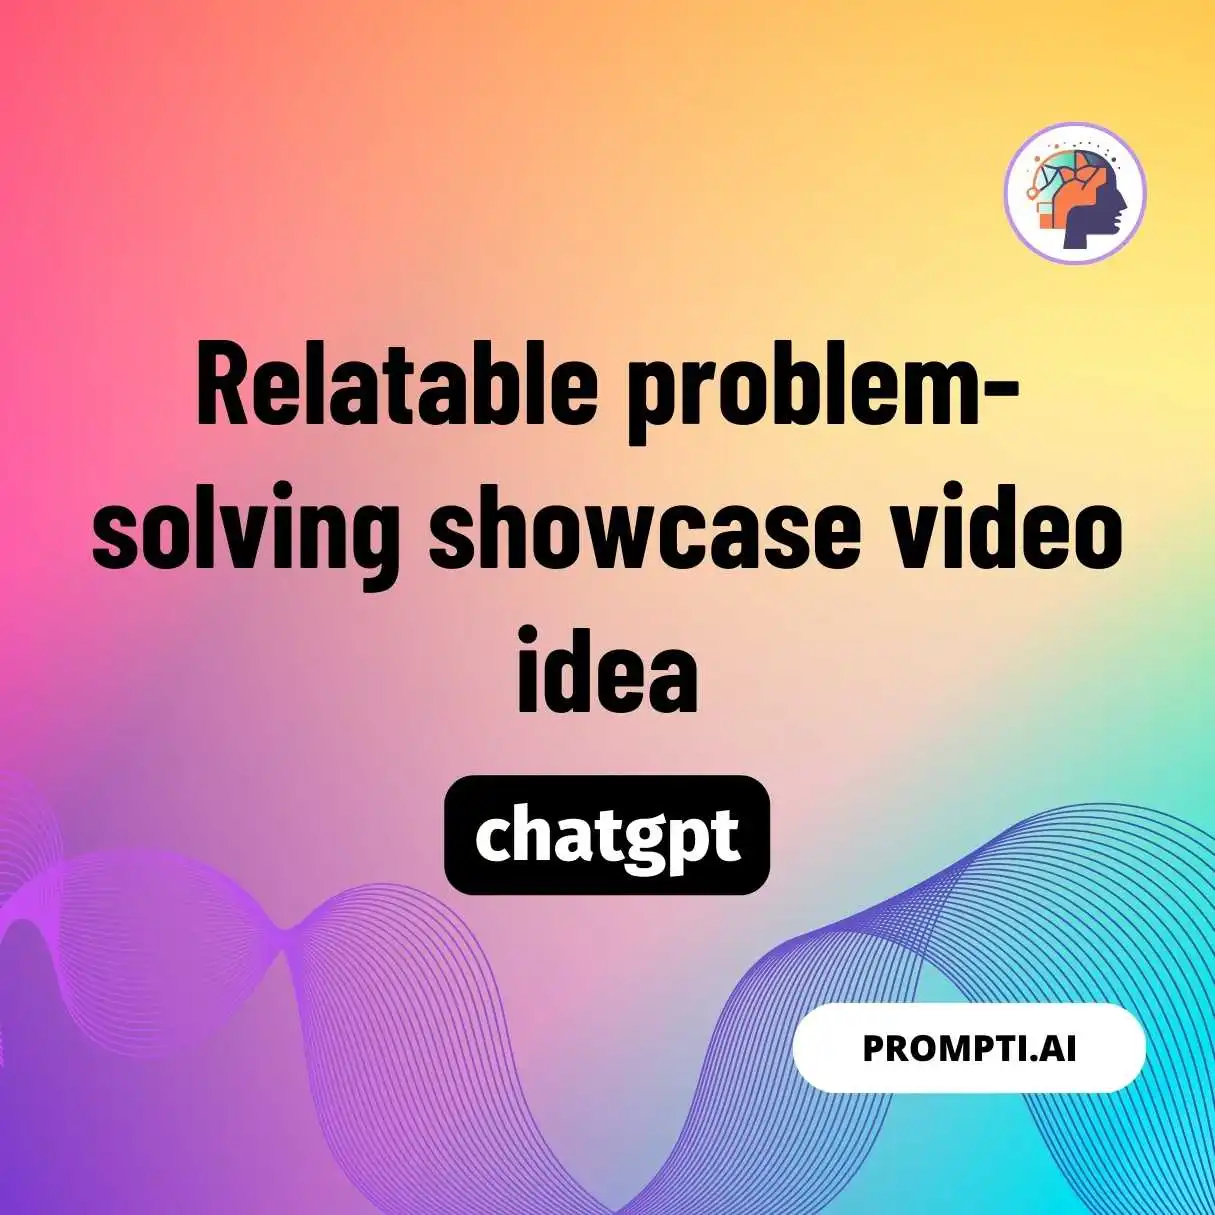 Relatable problem-solving showcase video idea